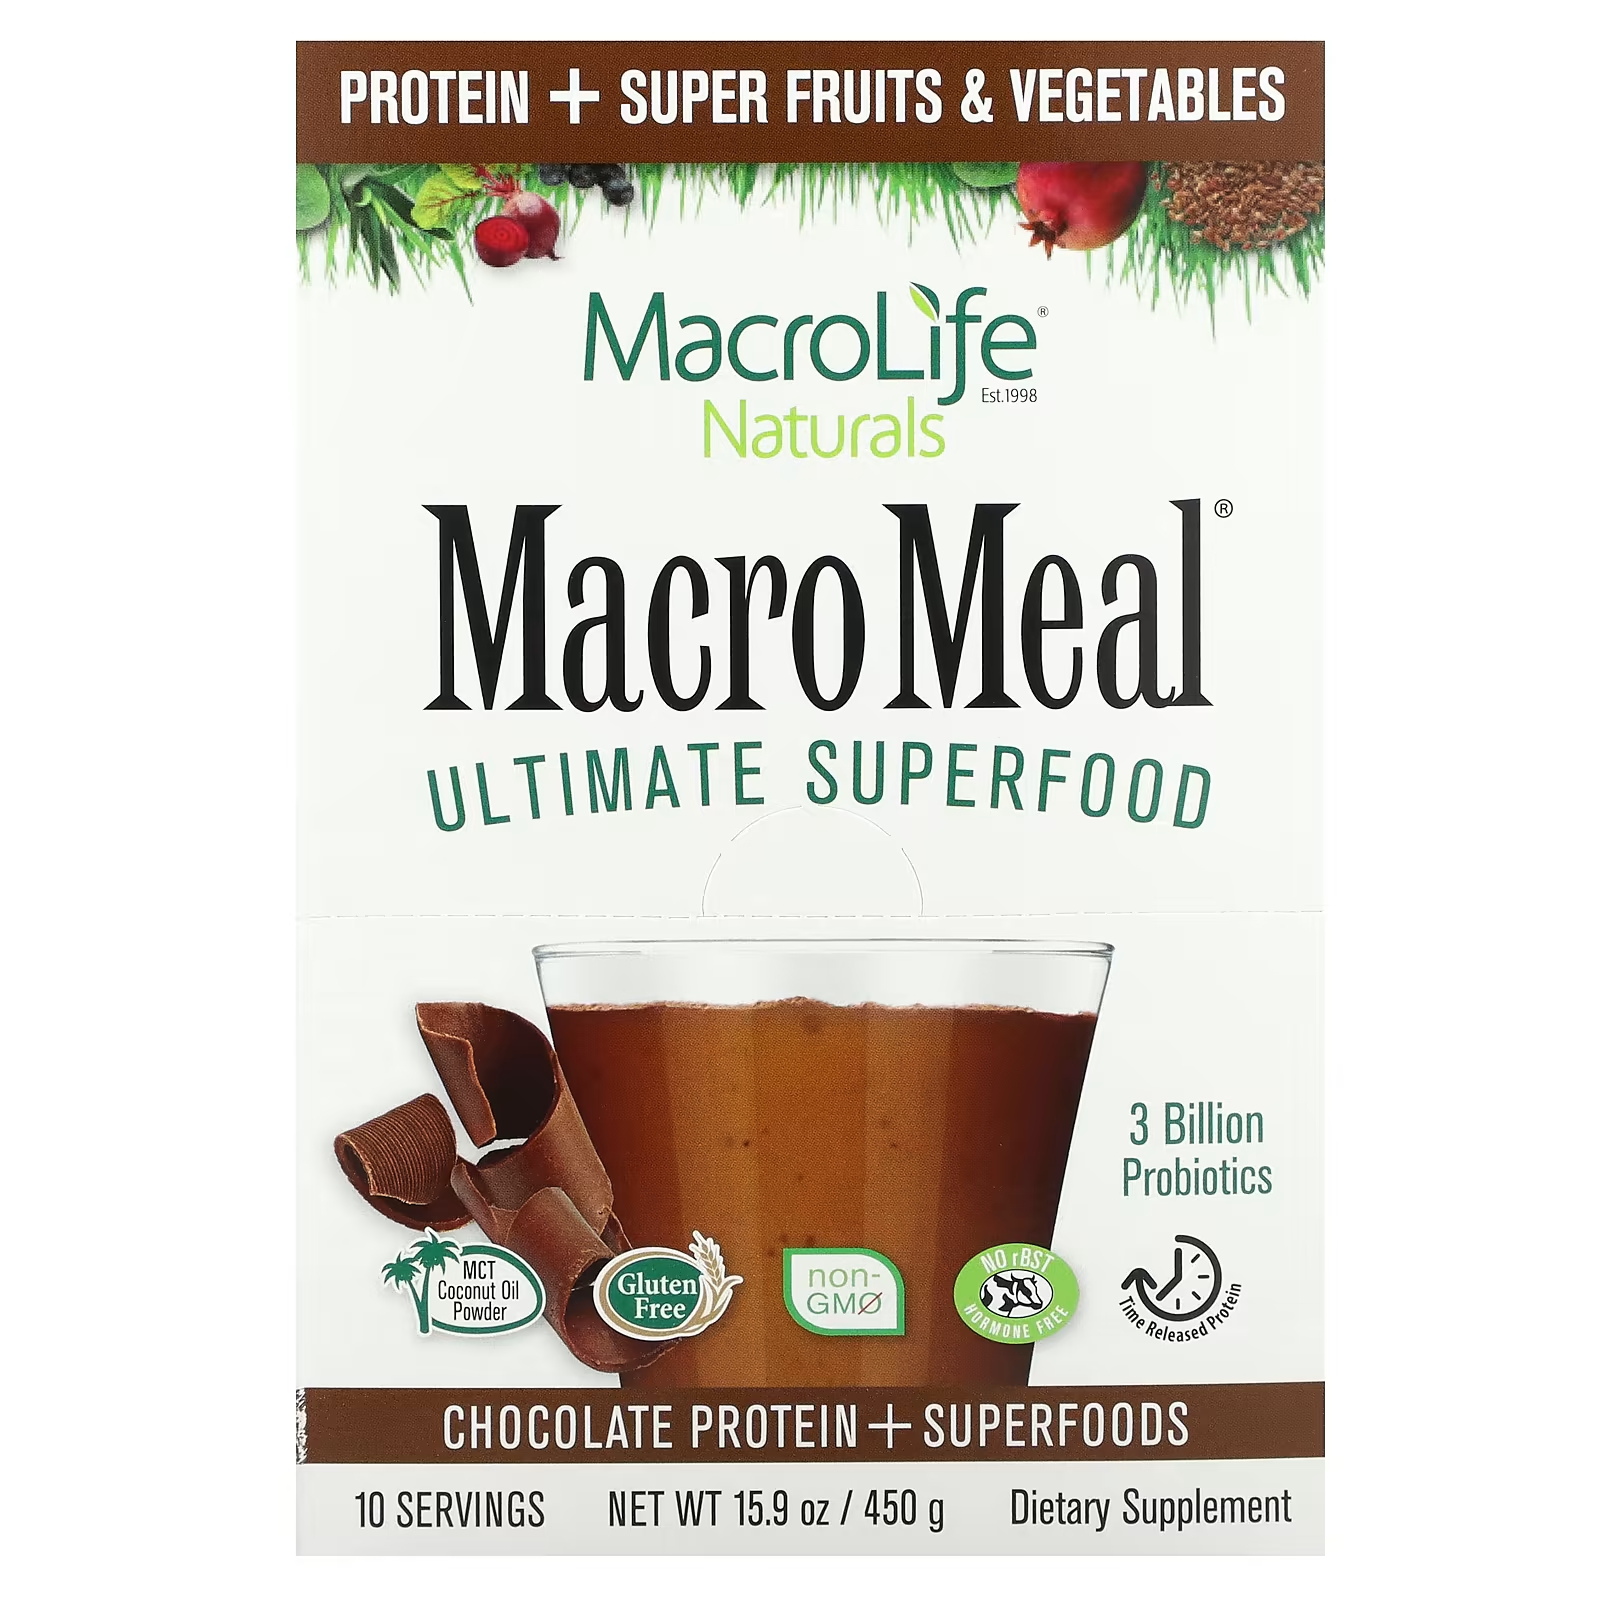 Macrolife Naturals MacroMeal Ultimate Superfood Chocolate 10 пакетов по 1,6 унции (45 г) каждый